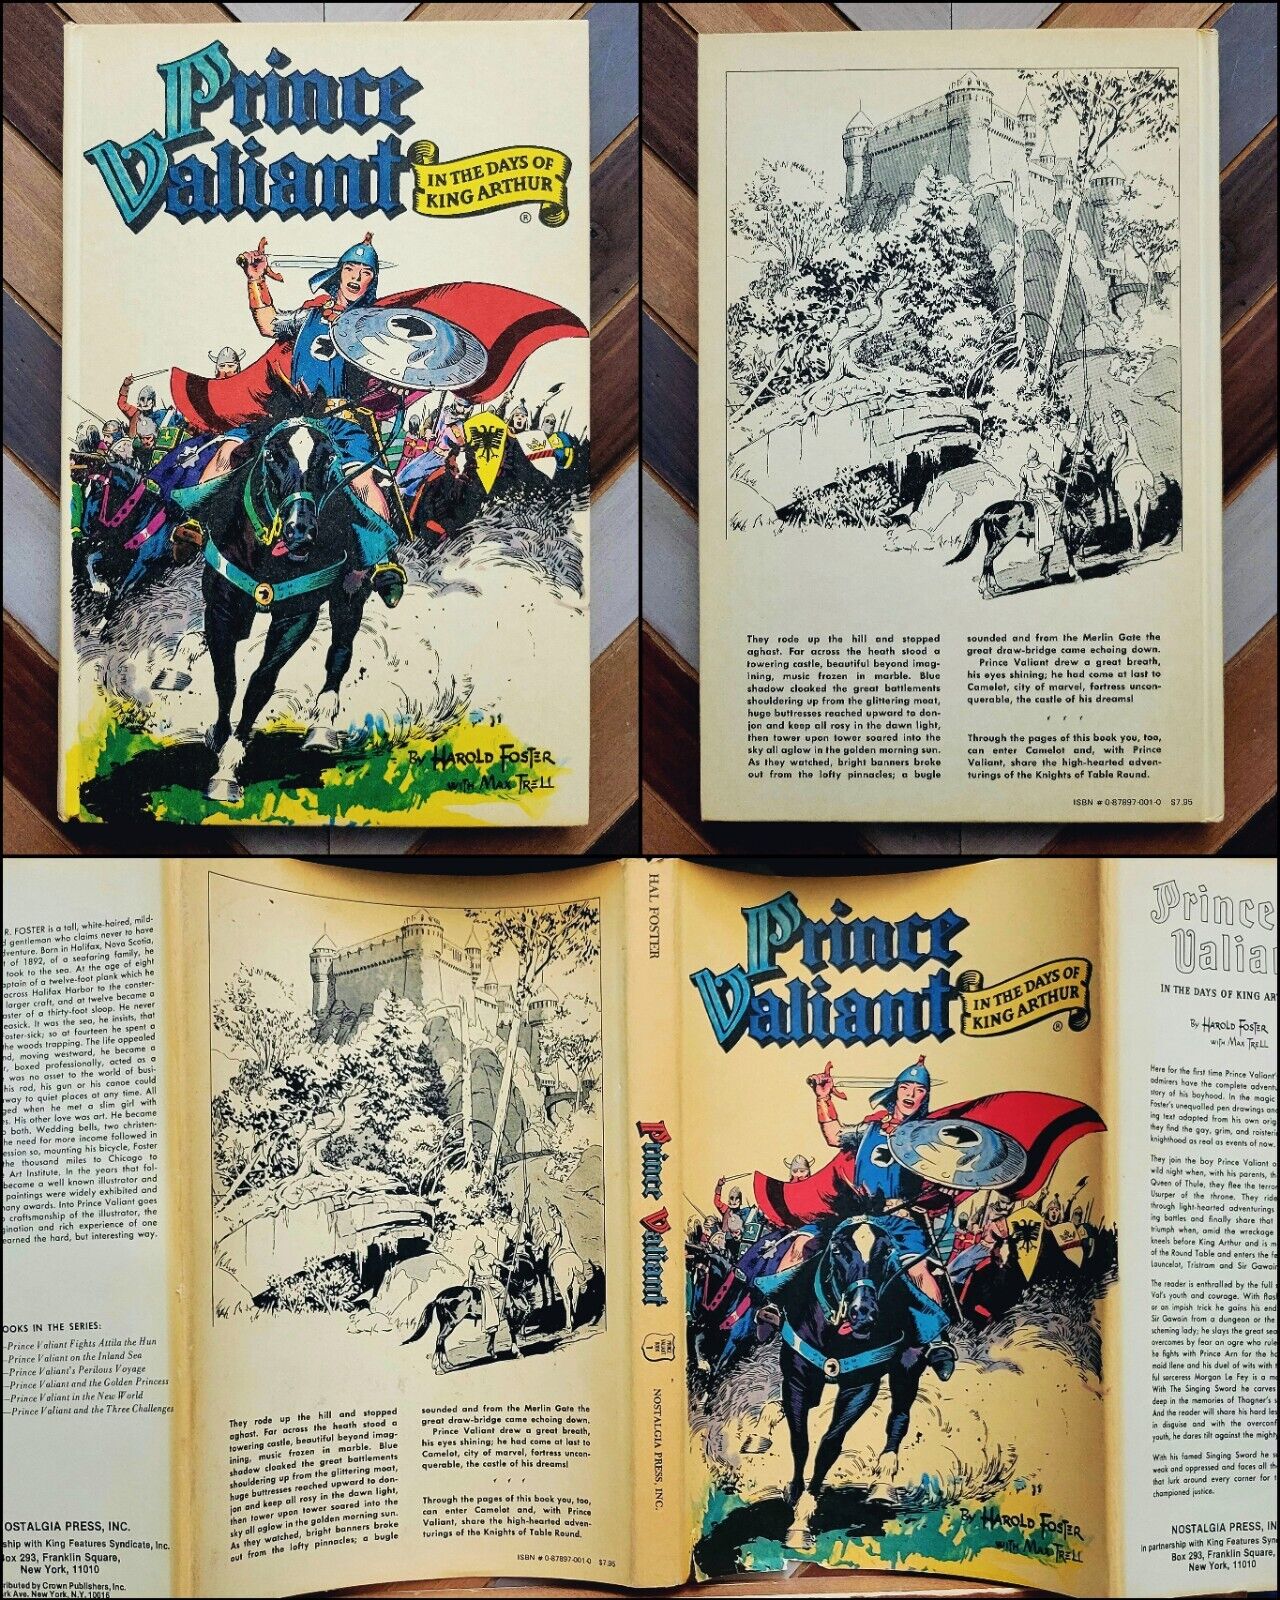 PRINCE VALIANT: Hardcover Vol.1 (Hal Foster / Nostalgia Press 1977) + Dustjacket